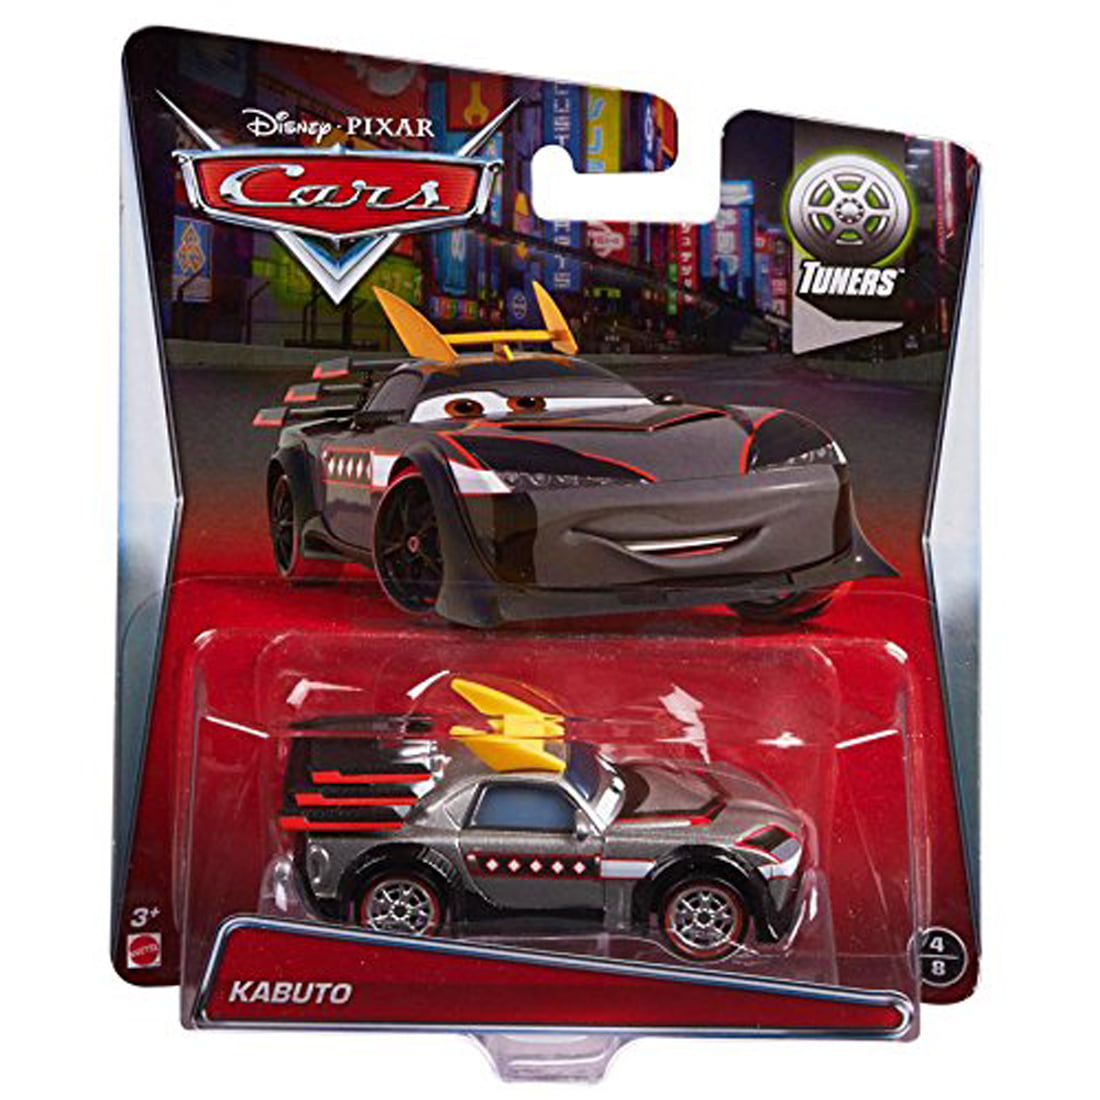 Disney Pixar Cars Auto Metall 1:55 Kabuto 